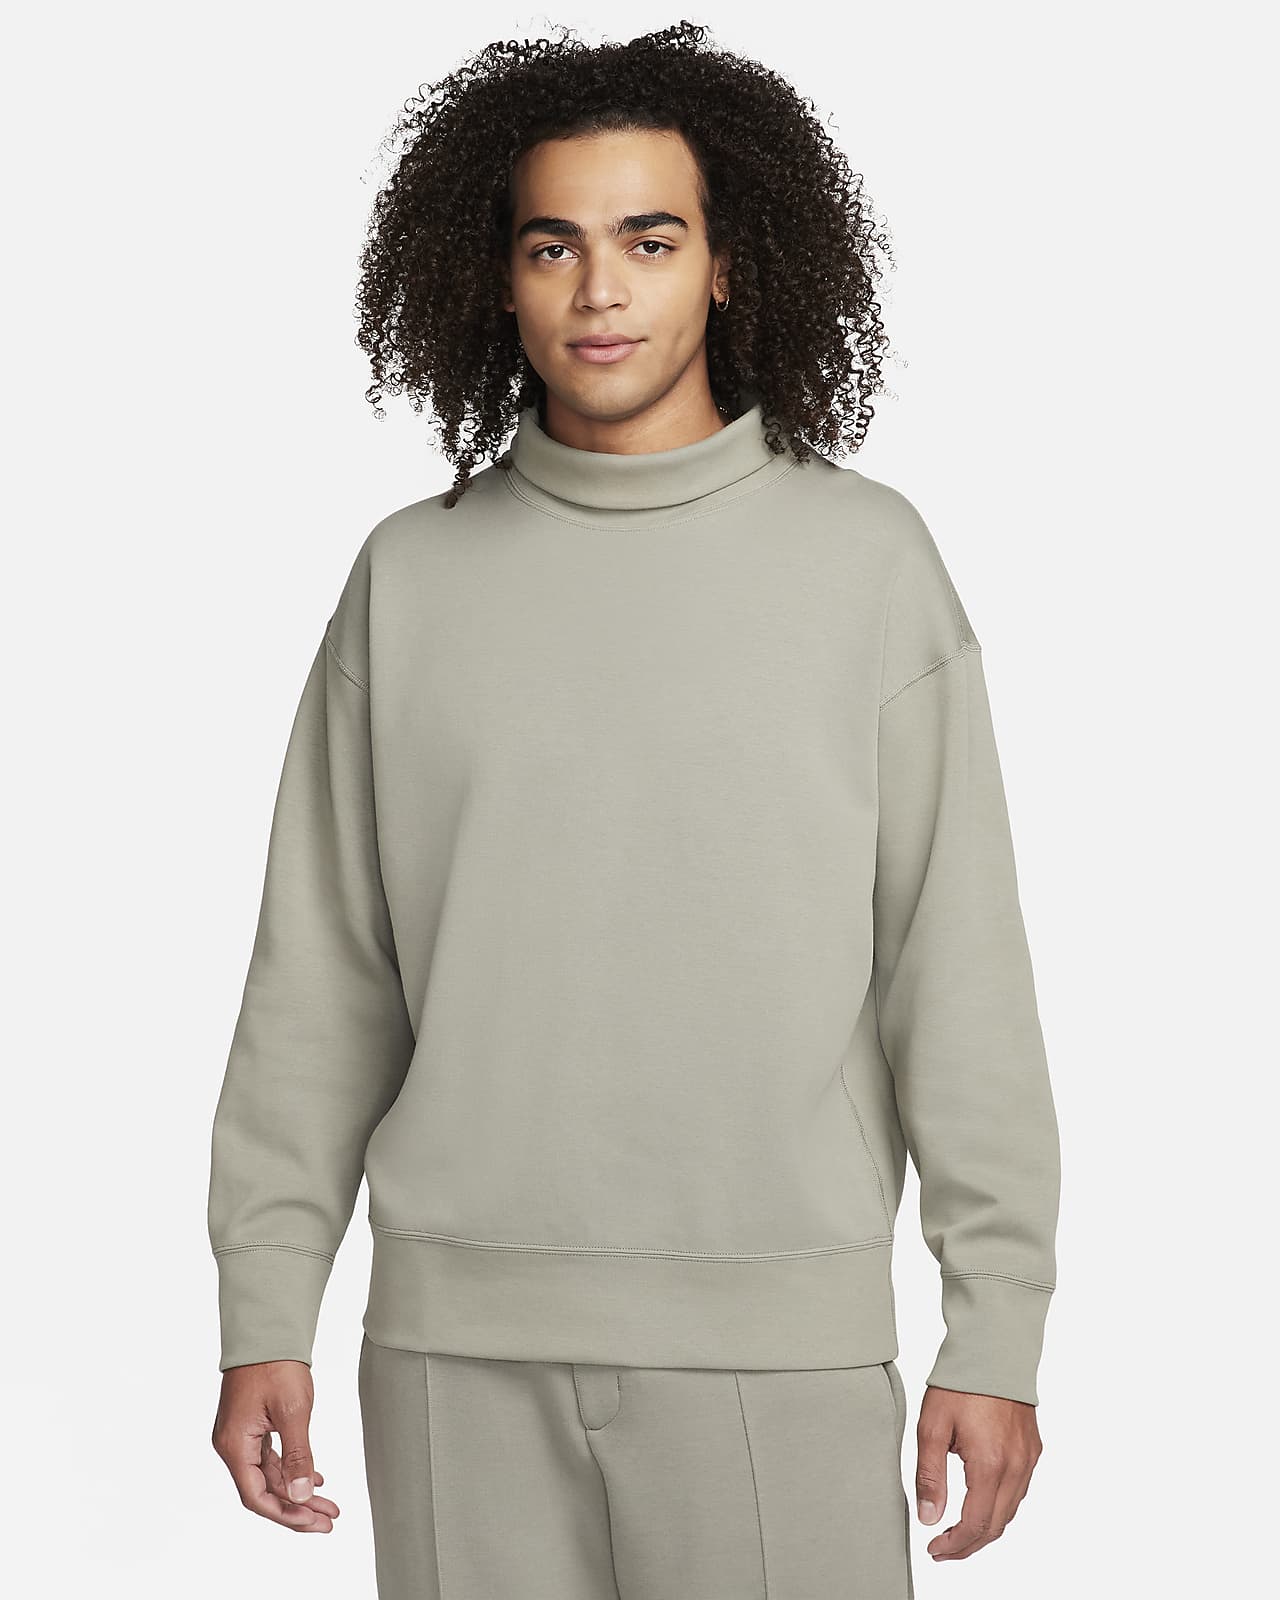 Sweatshirt & Sweatpants for Cohesive Gym Style 